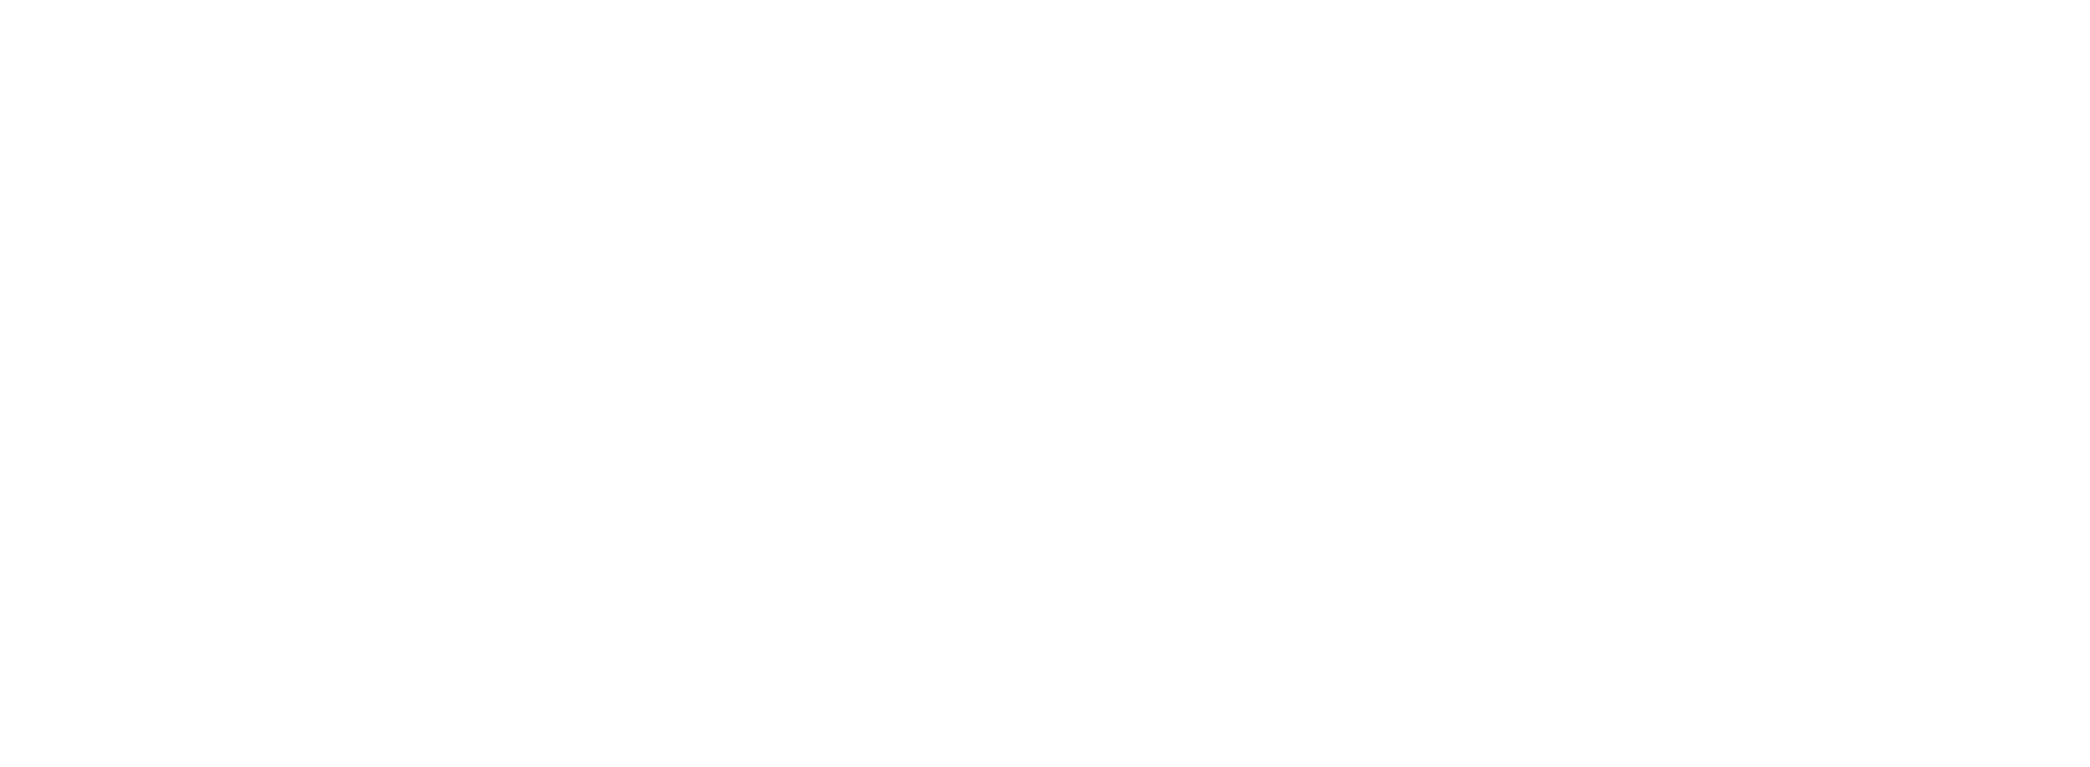 Ufc Logo Png Ufc Gym Philippines Logo